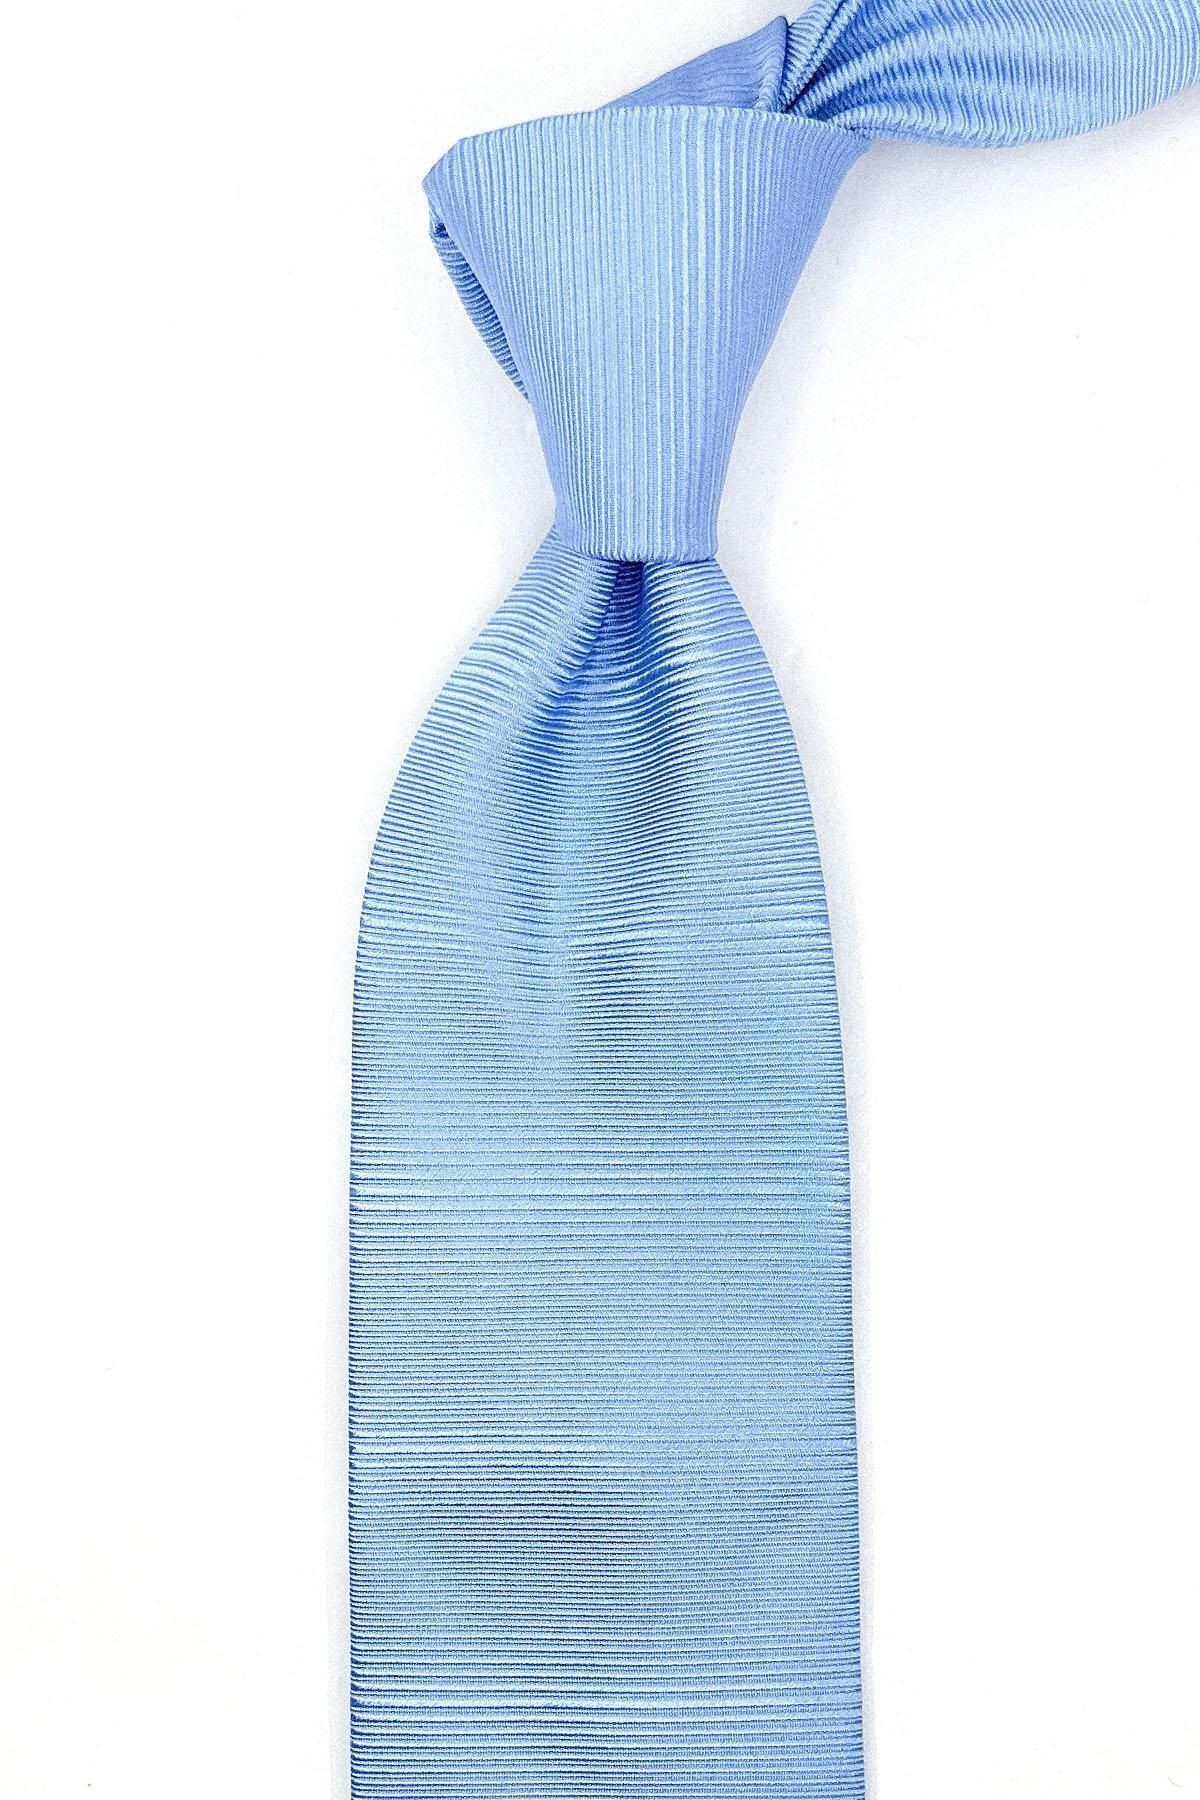 Kravatkolik Borbiago Style Mavi Düz İtalyan İpek Kravat İK1383